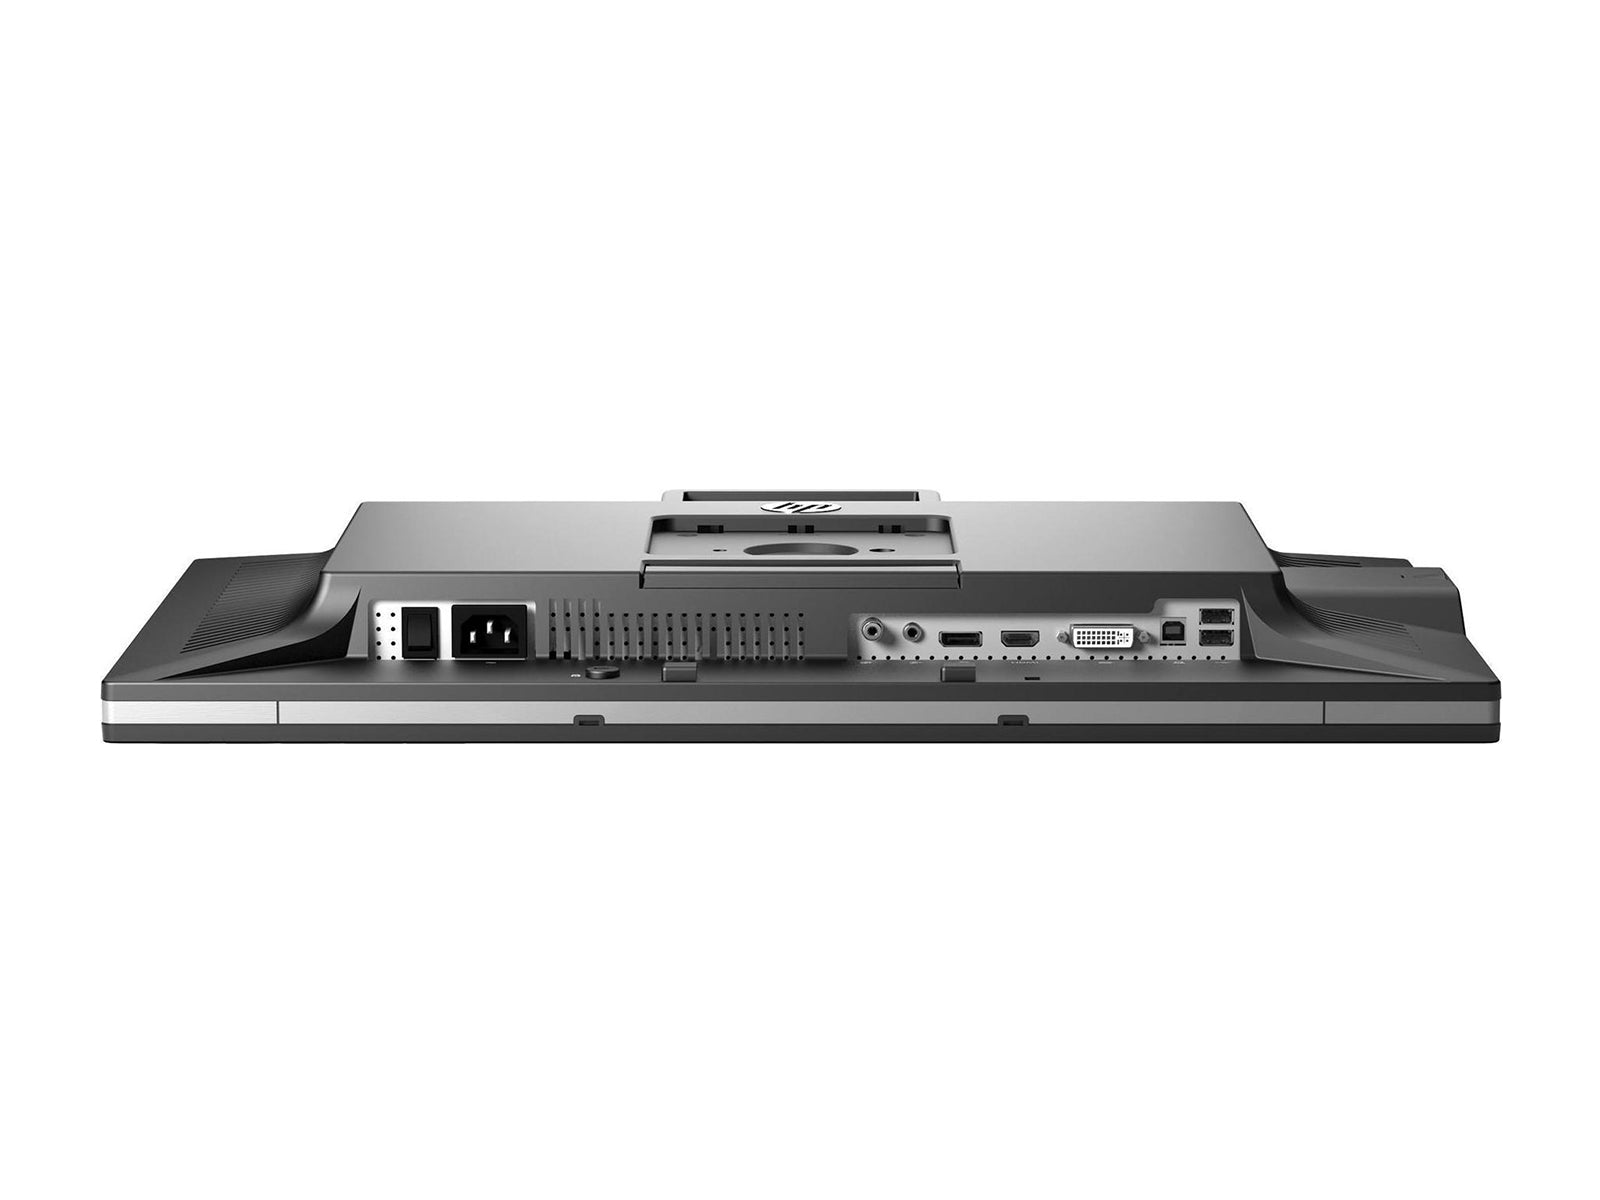 HP ZR2440w 24" WUXGA 1920x1200 LED Display Monitor (XW477A4#ABA) Monitors.com 